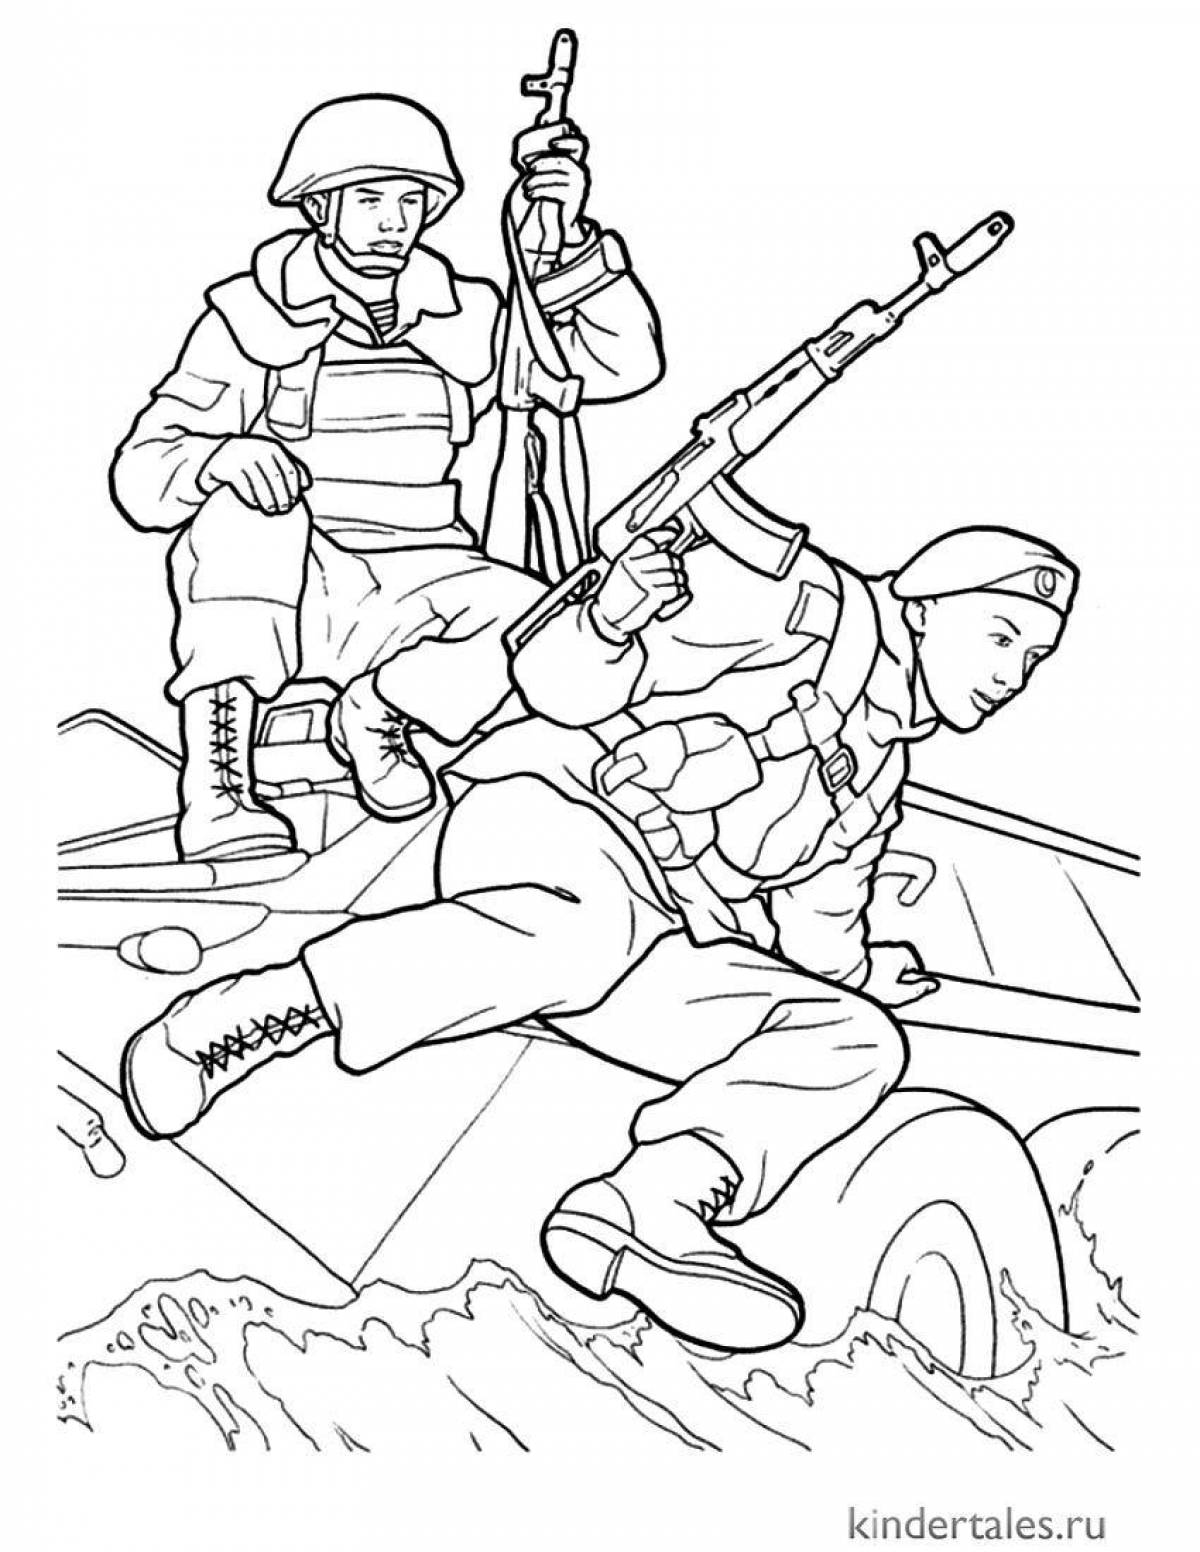 Блестящая раскраска рисунок солдата от школьника